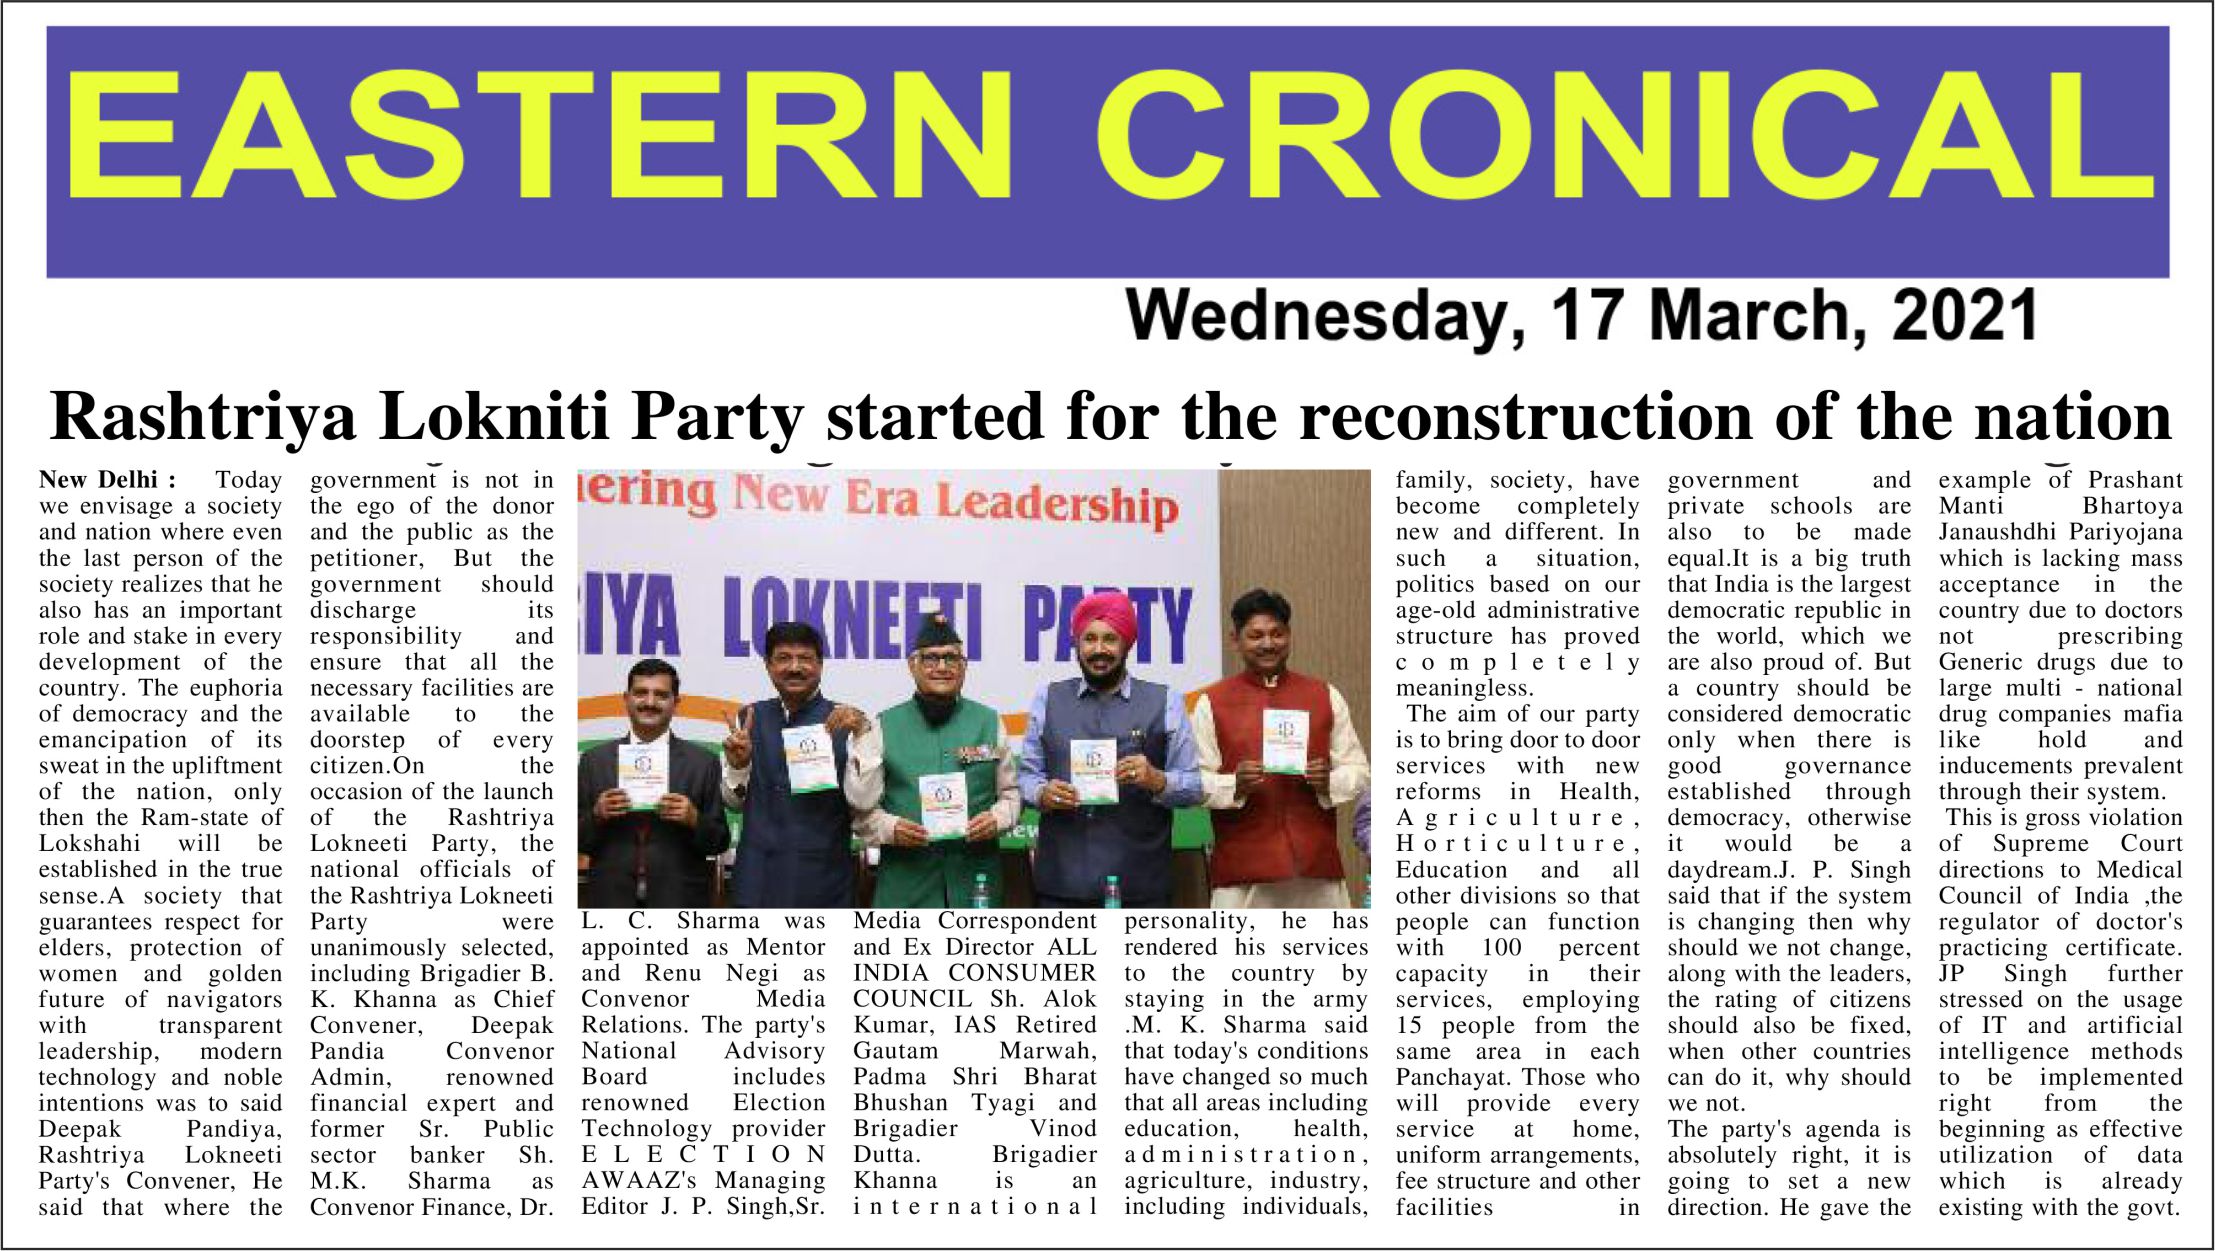 Rashtriya Lokneeti Party started for the reconstruction of the nation